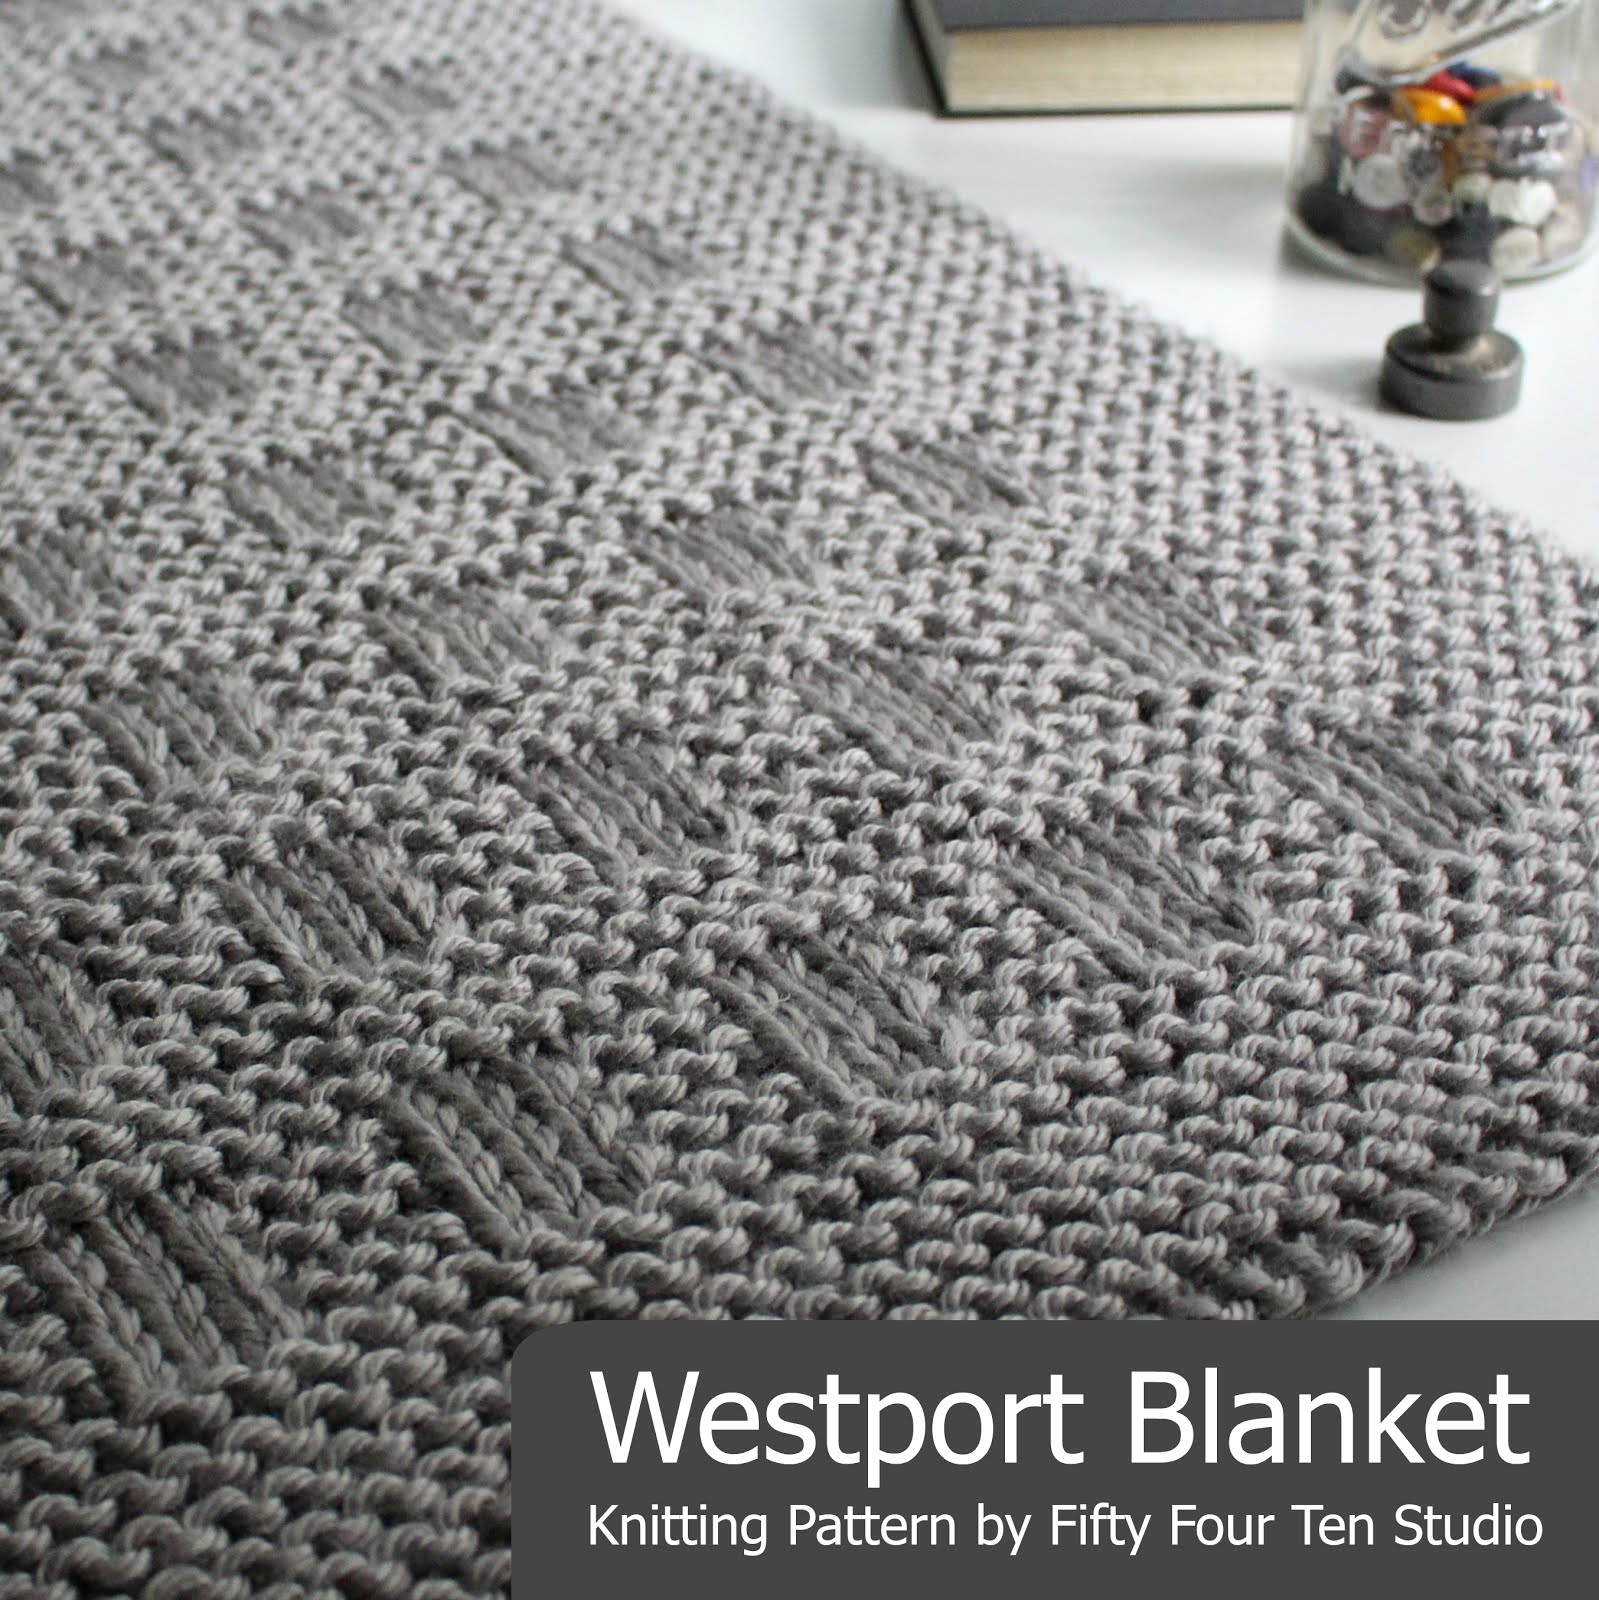 Super Easy Knit Baby Blanket Pattern Fifty Four Ten Studio Easy Blanket Knitting Patterns